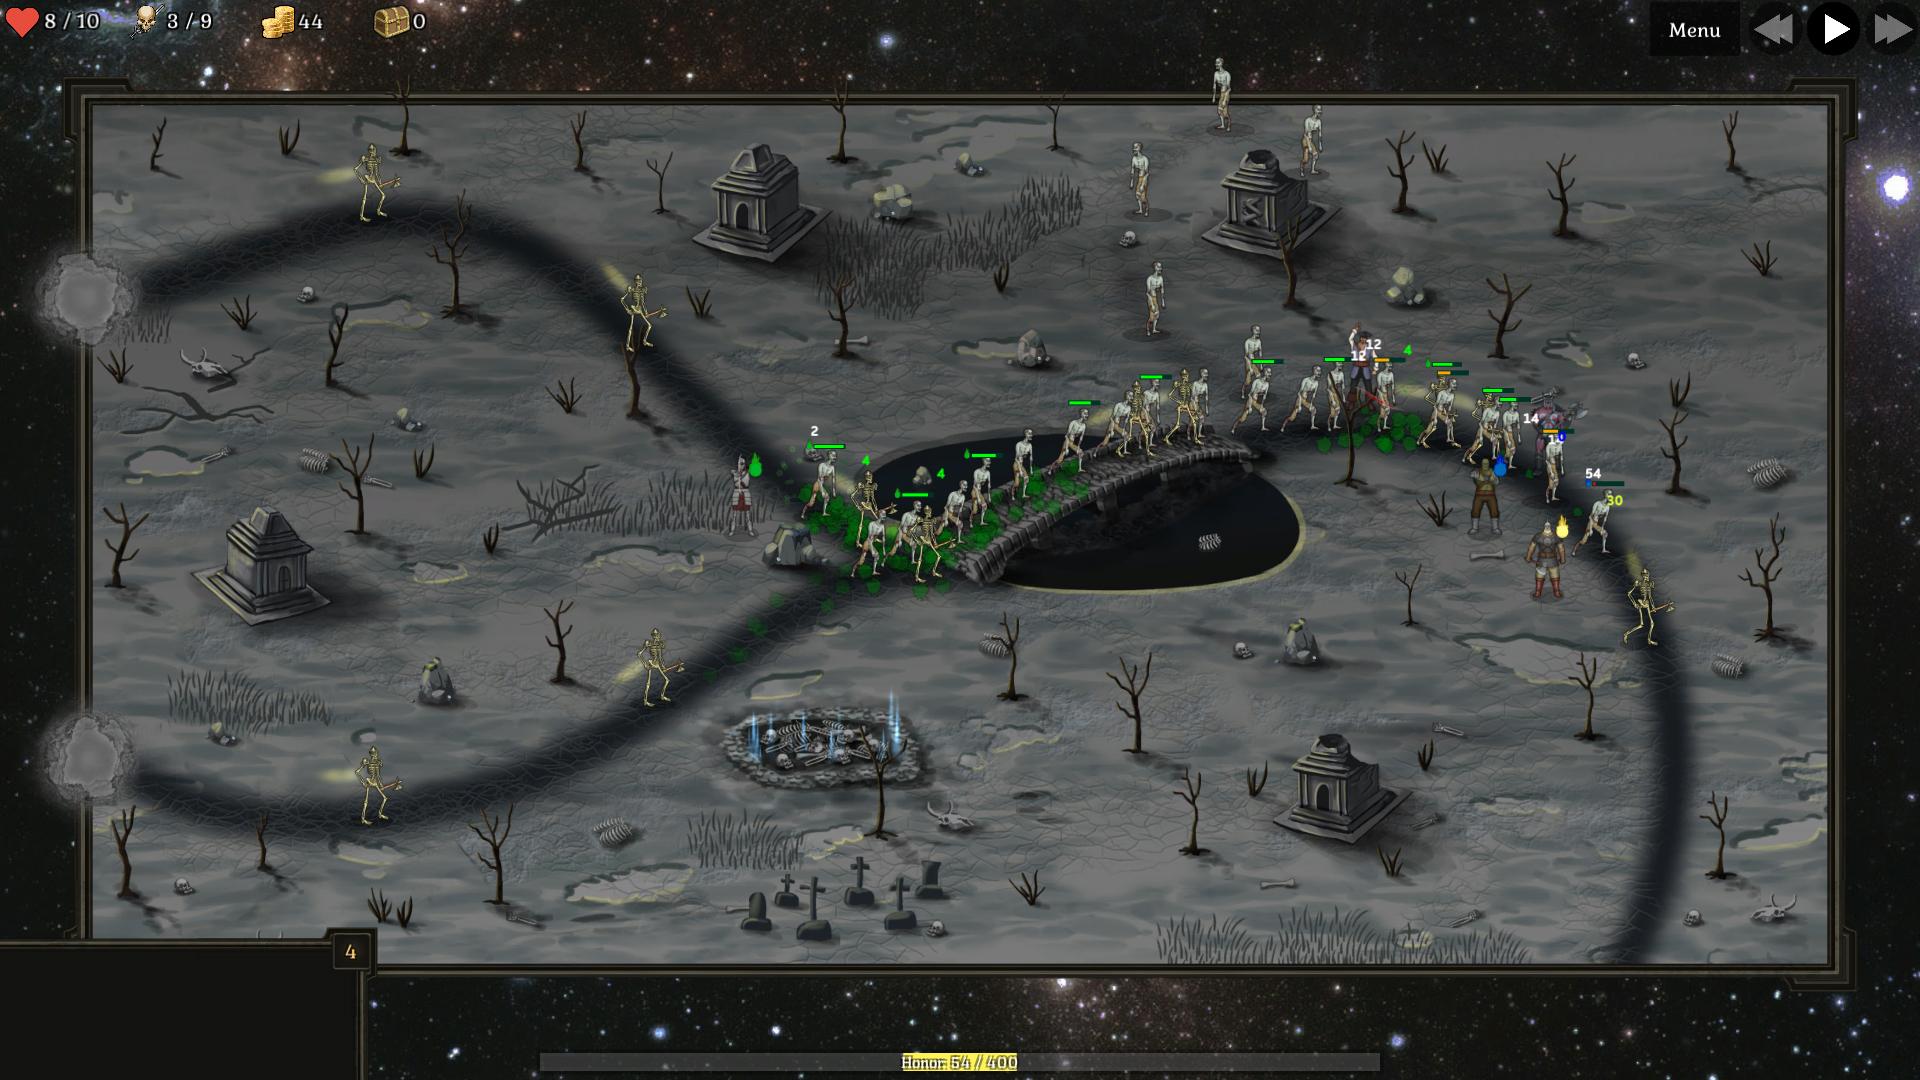 Screenshot №8 from game Ultimus bellum